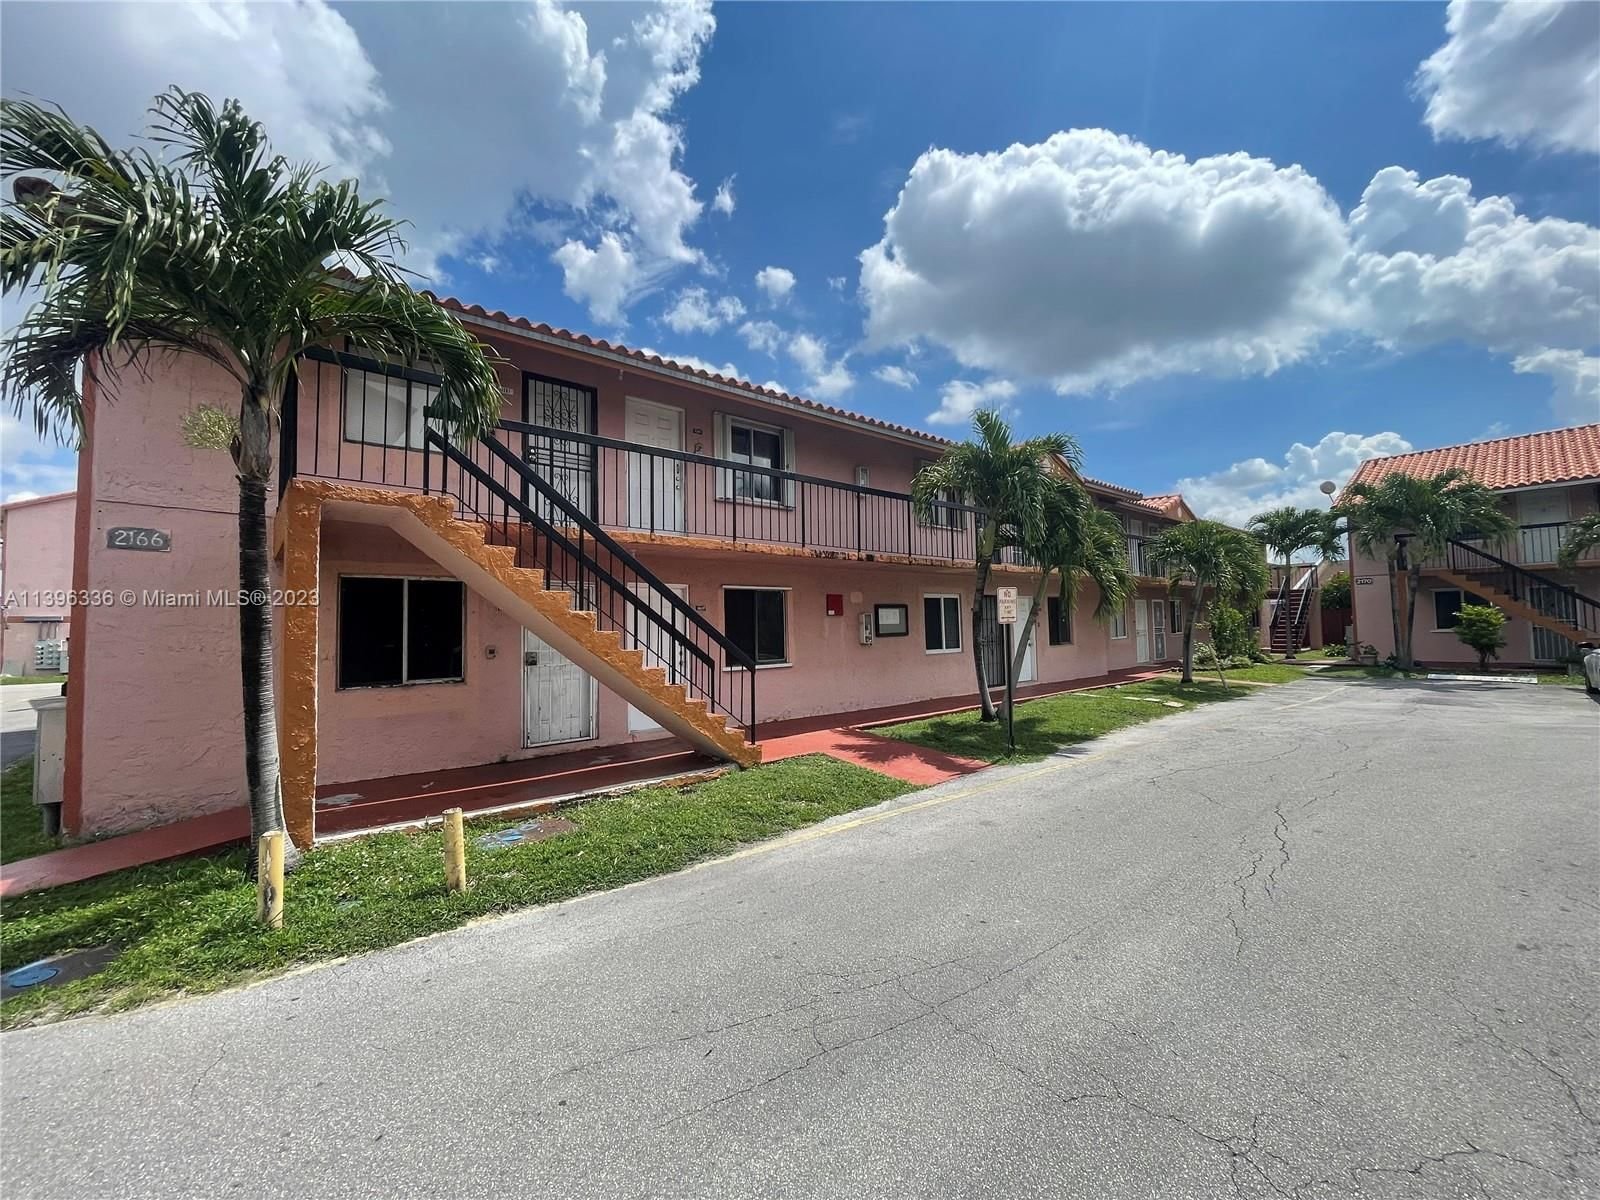 Real estate property located at 2166 60th St #15103, Miami-Dade County, HIALEAH CLUB VILLAS CONDO, Hialeah, FL